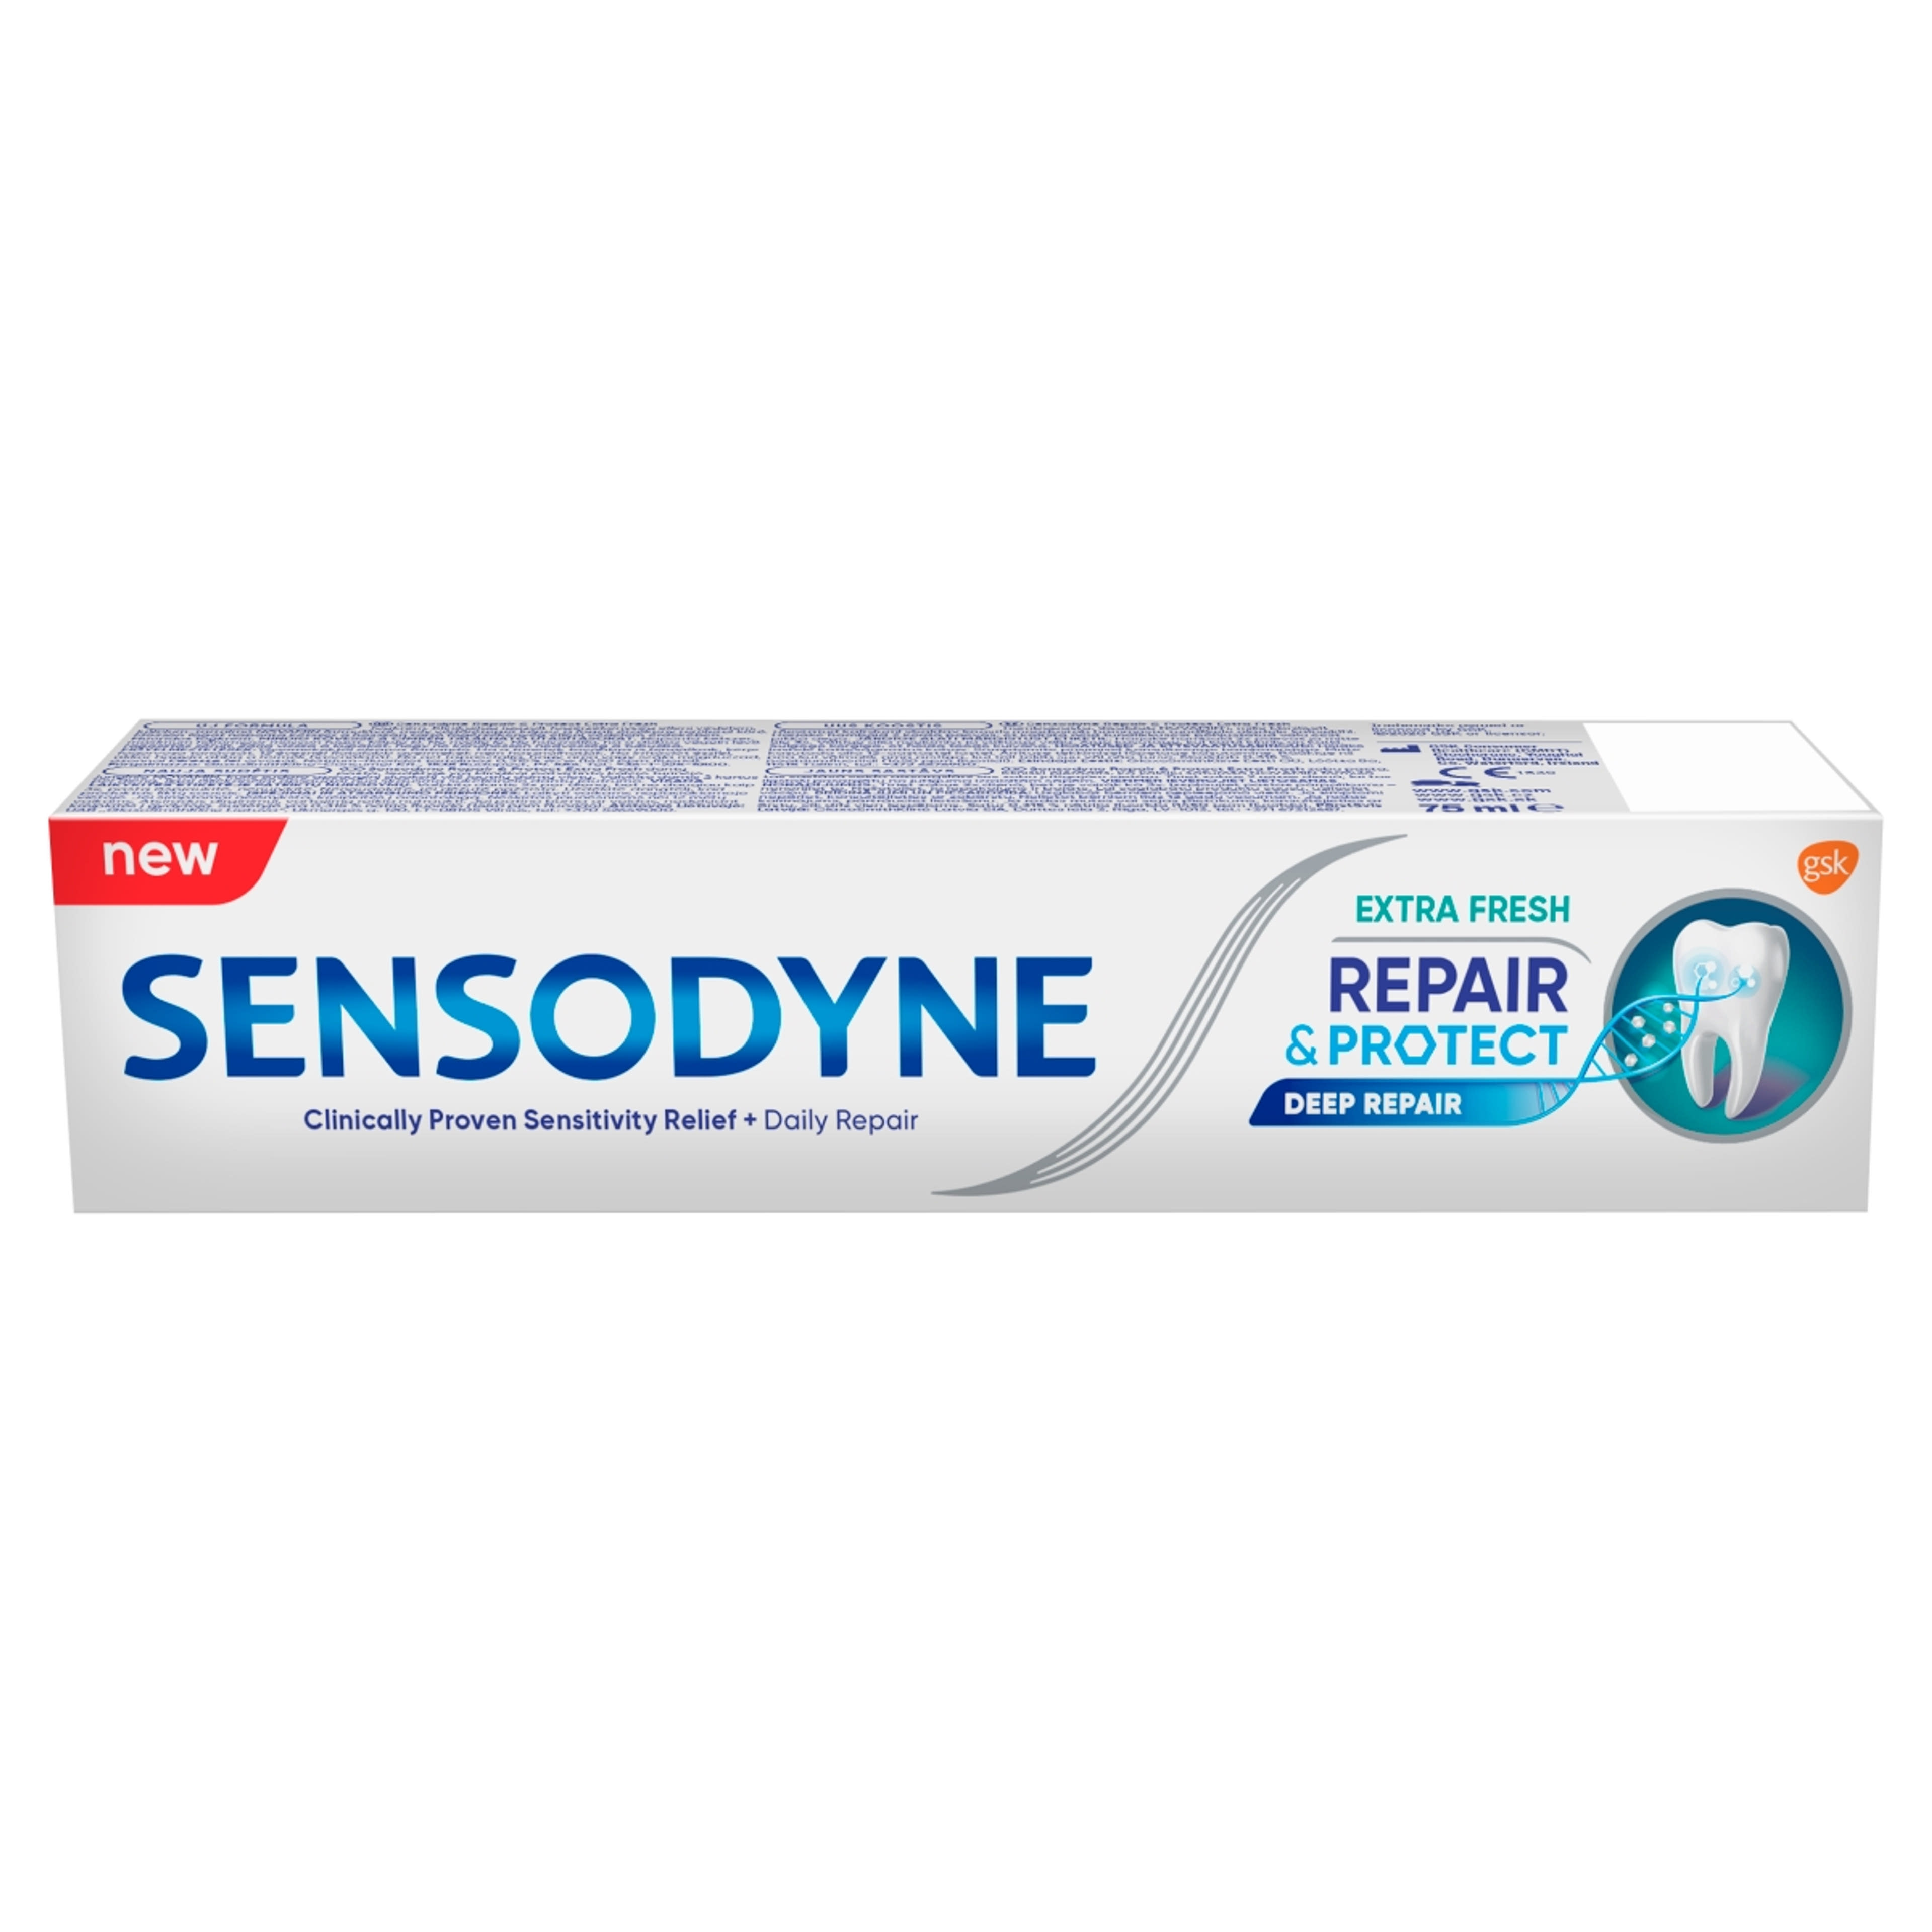 Sensodyne Repair & Protect Extra Fresh fogkrém - 75 ml